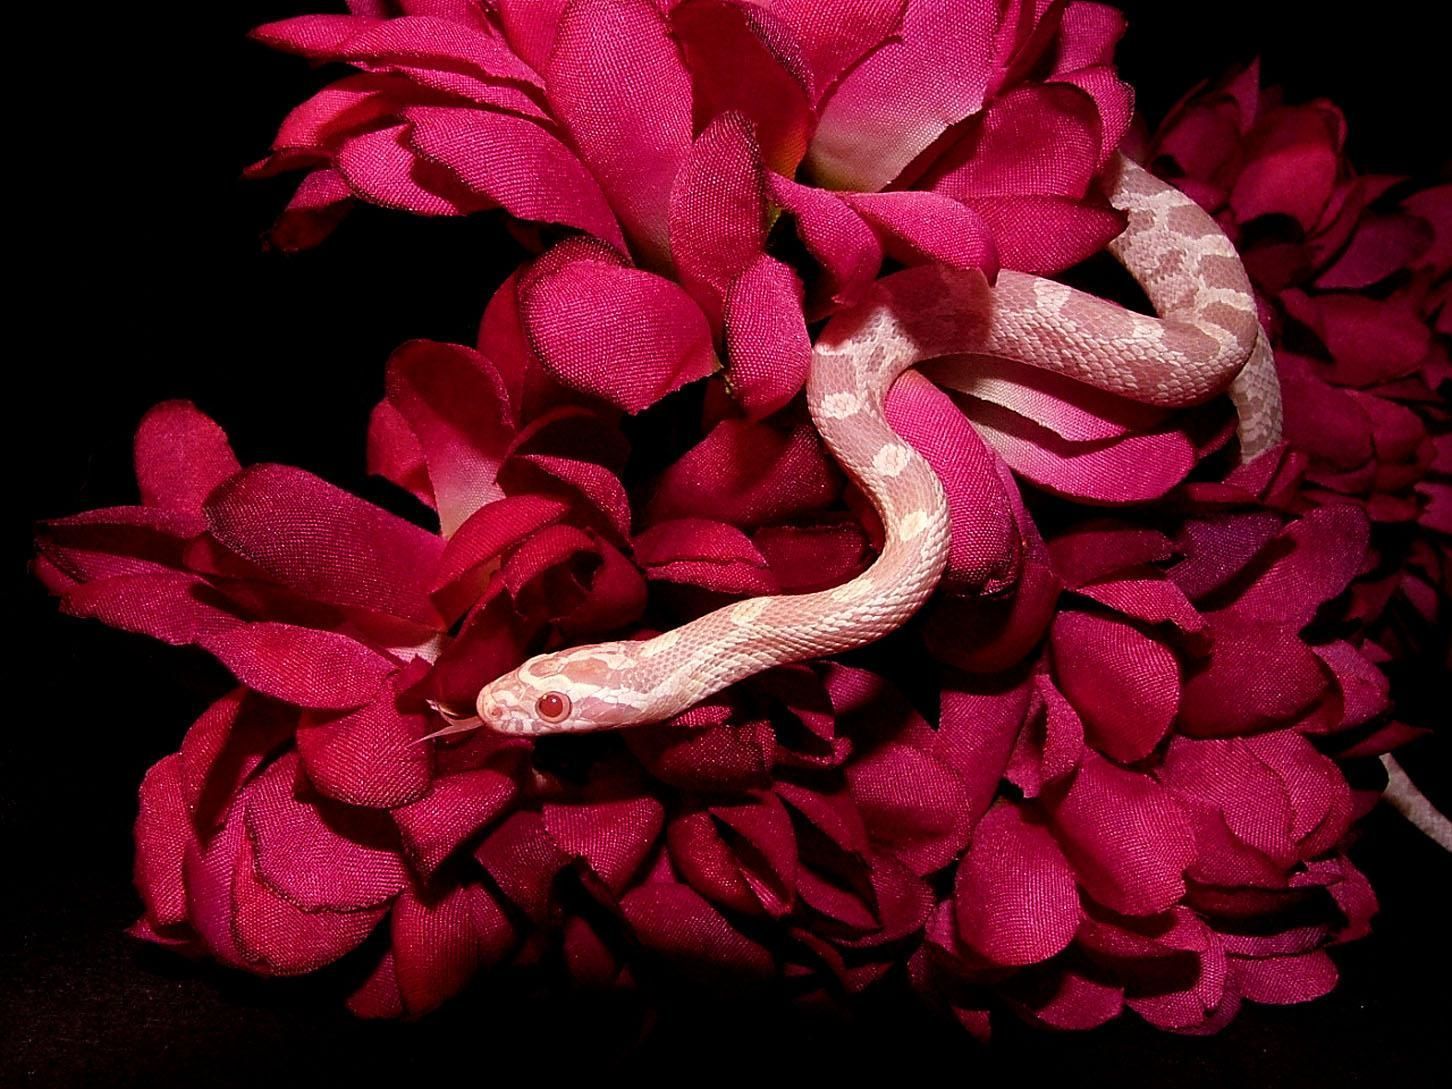 A snake on a red flower - Snake